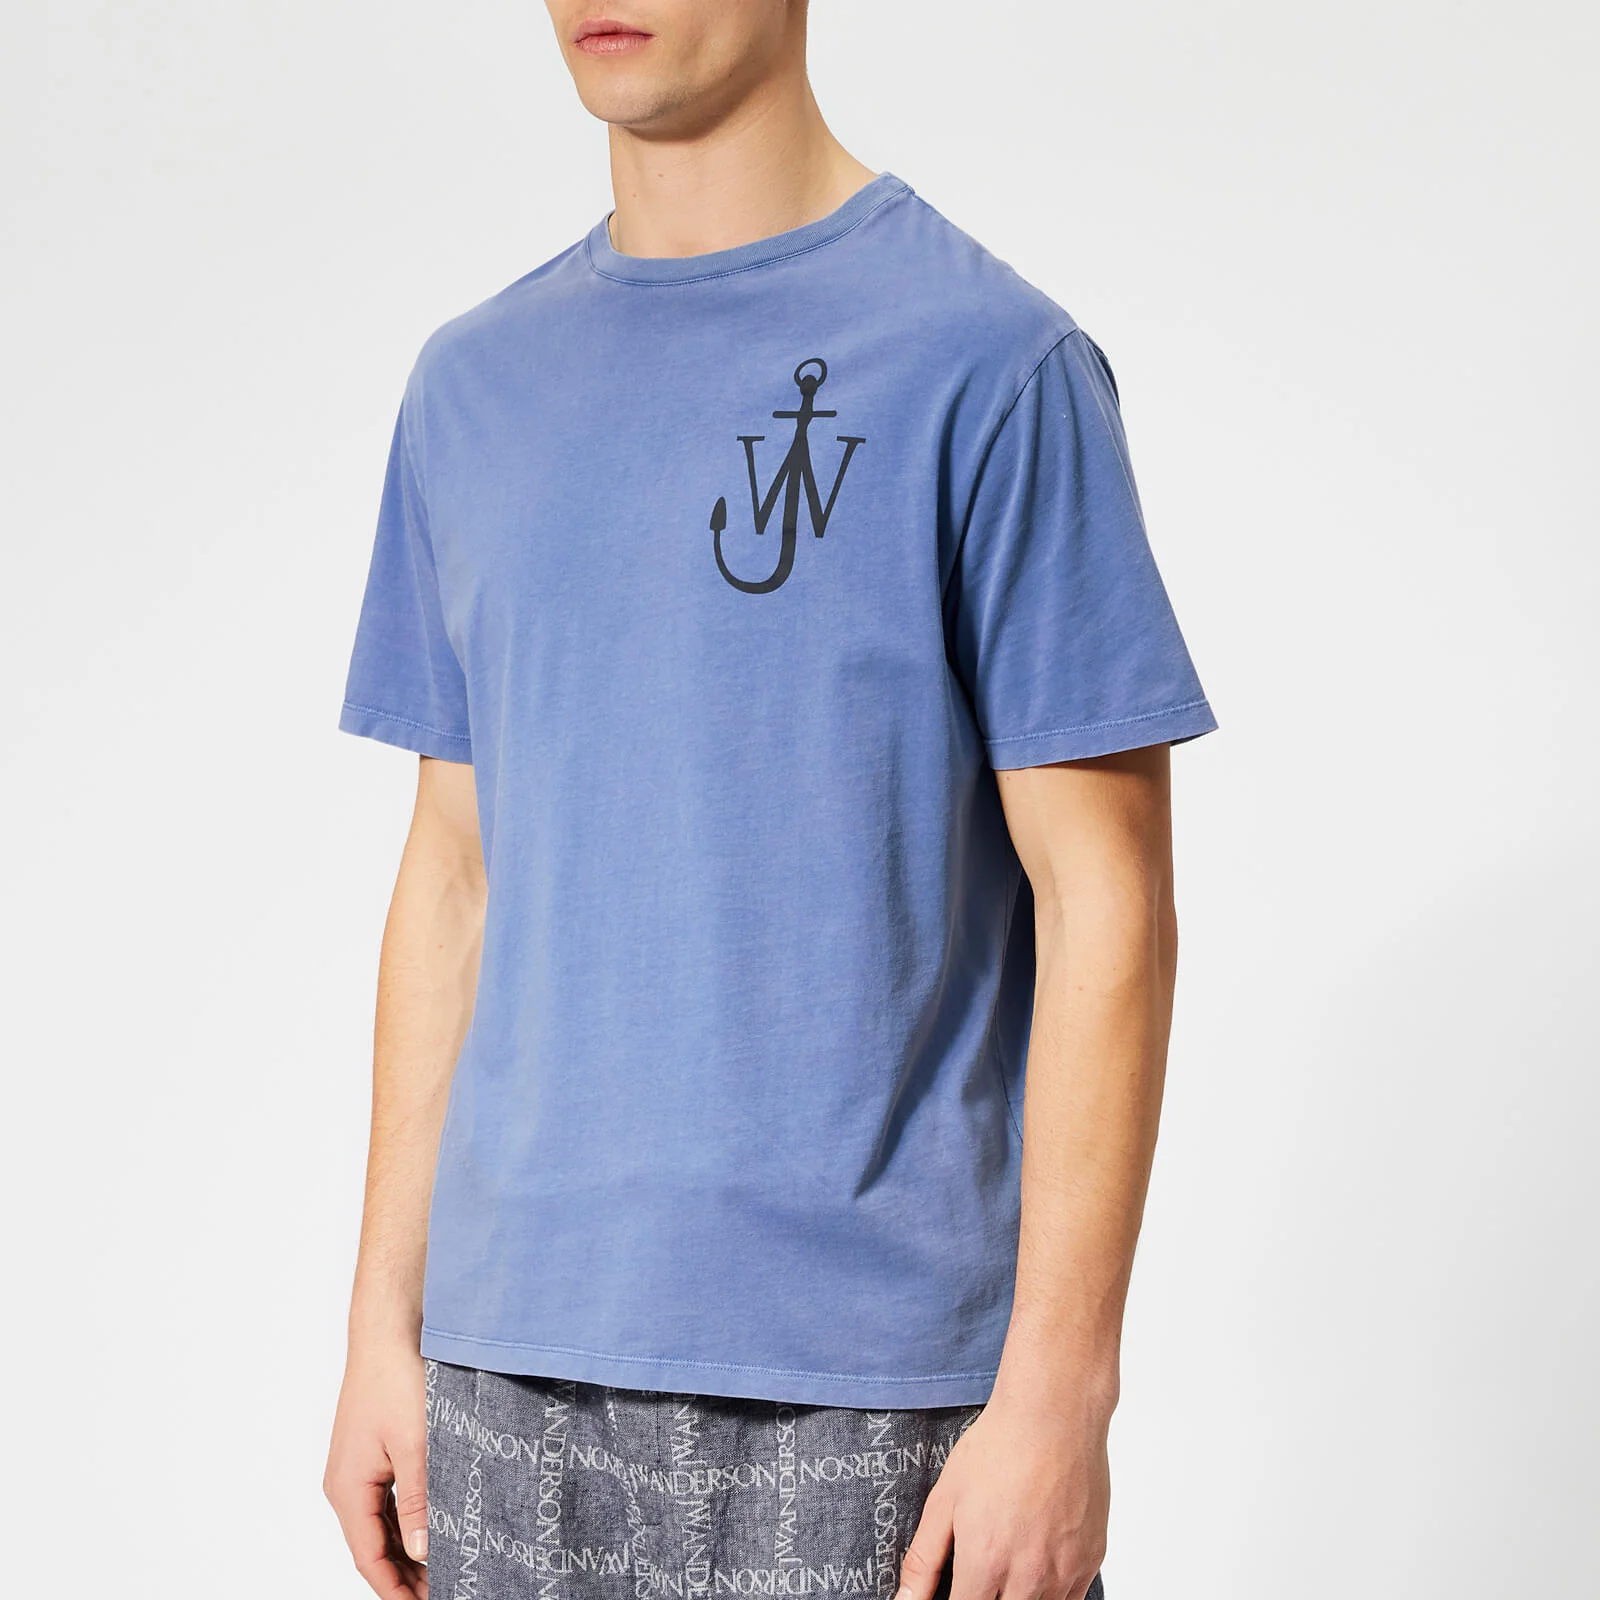 JW Anderson Men's JWA Anchor Print T-Shirt - Indigo Image 1